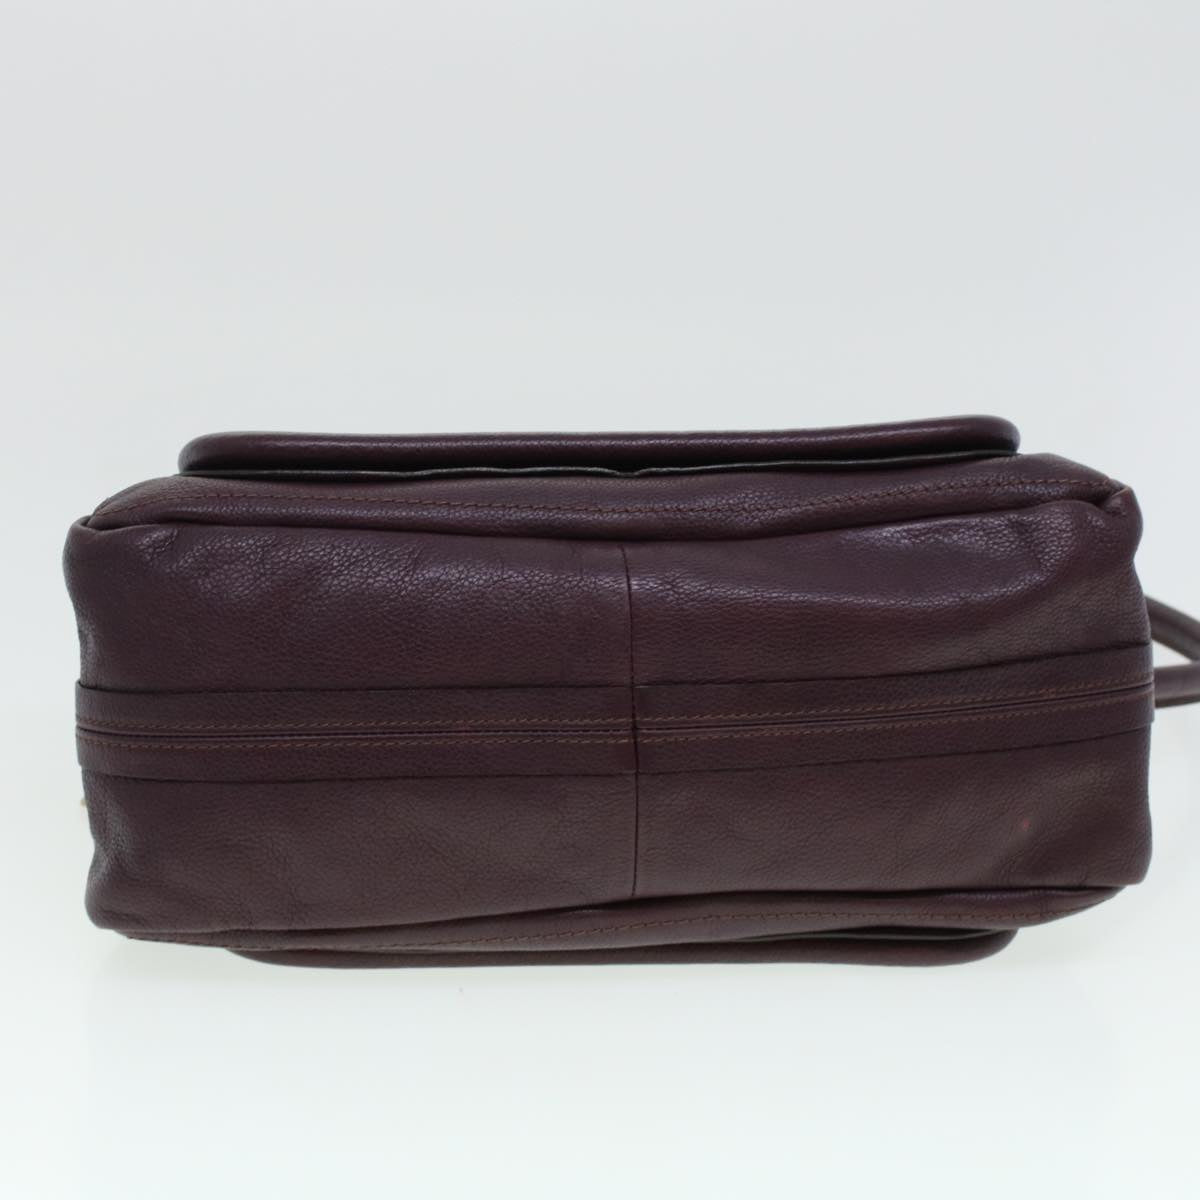 Chloe Paraty Hand Bag Leather Purple 02-12-50-65 Auth 44039